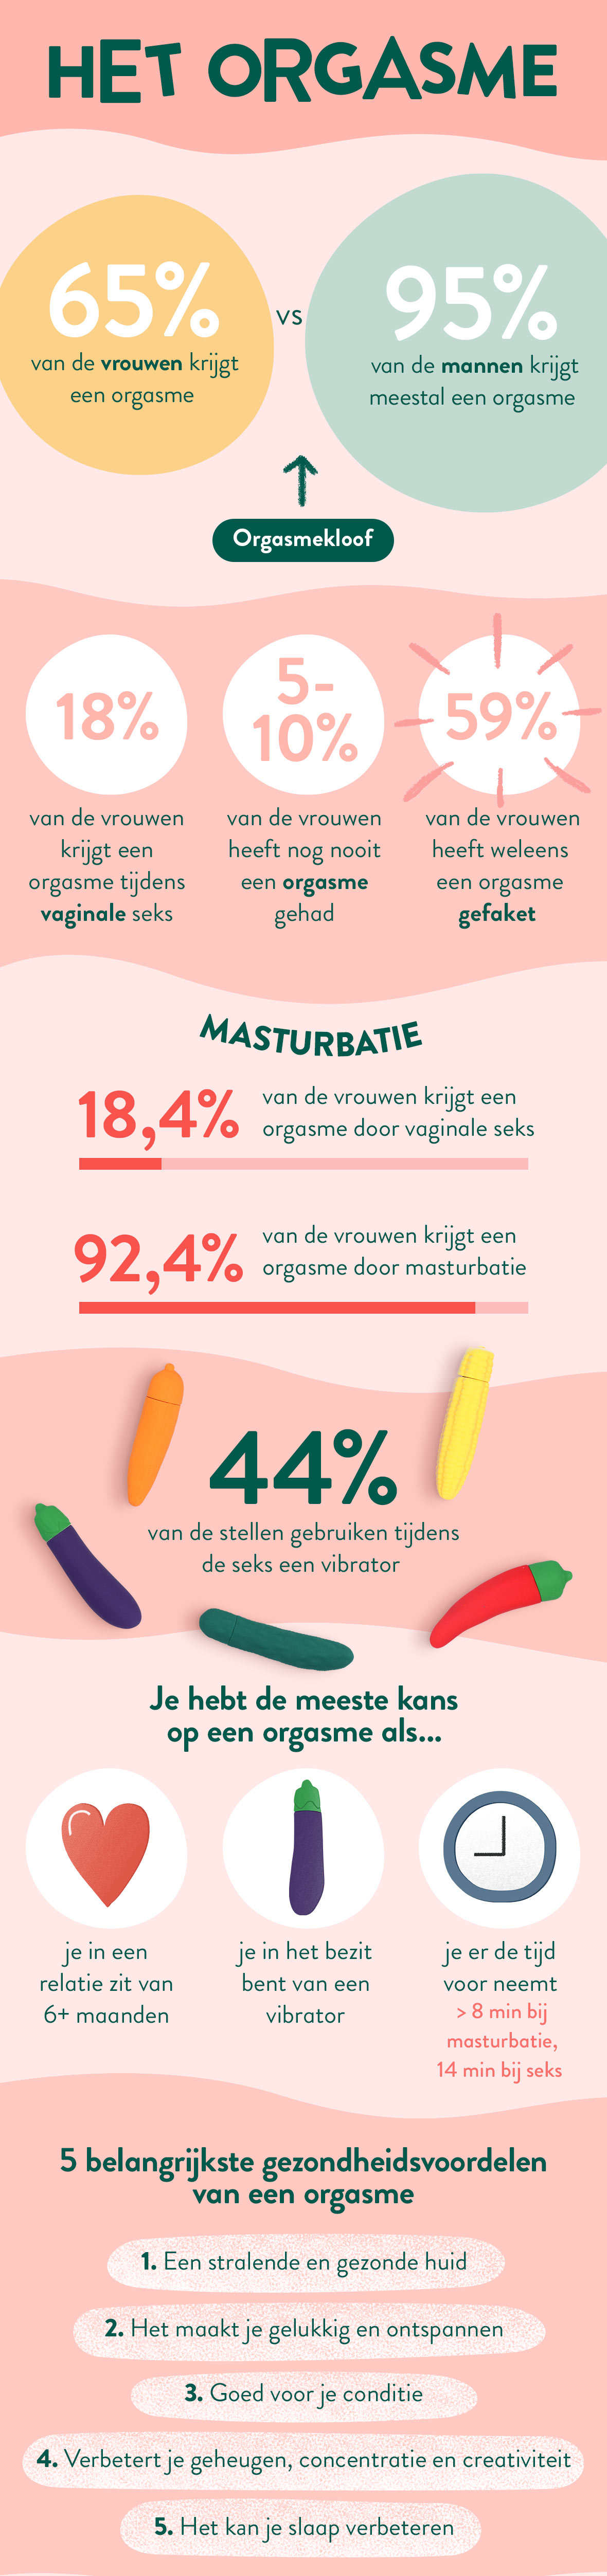 Orgasme infographic